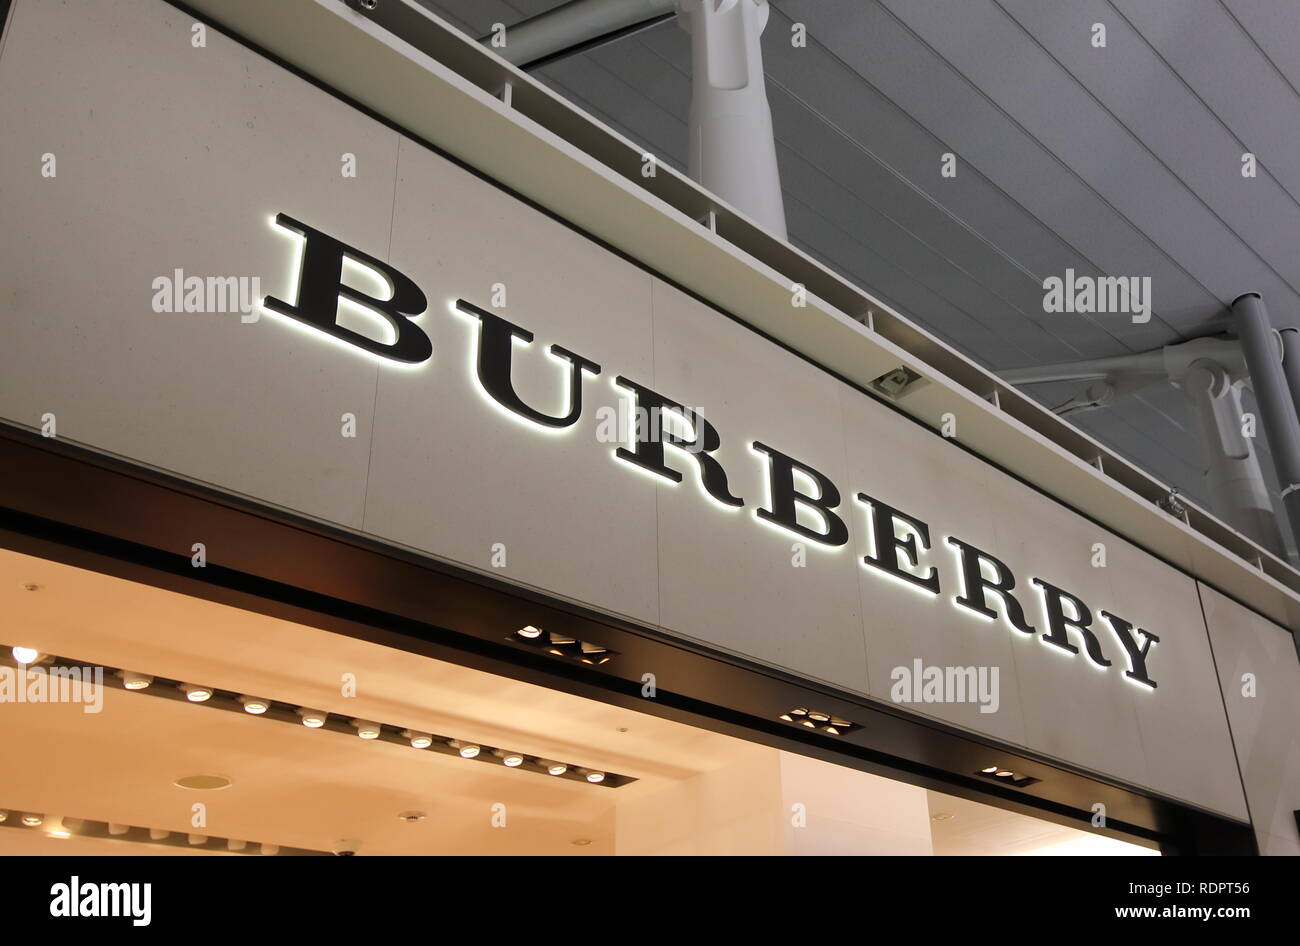 Burberry fashion brand company logo Stock Photo - Alamy